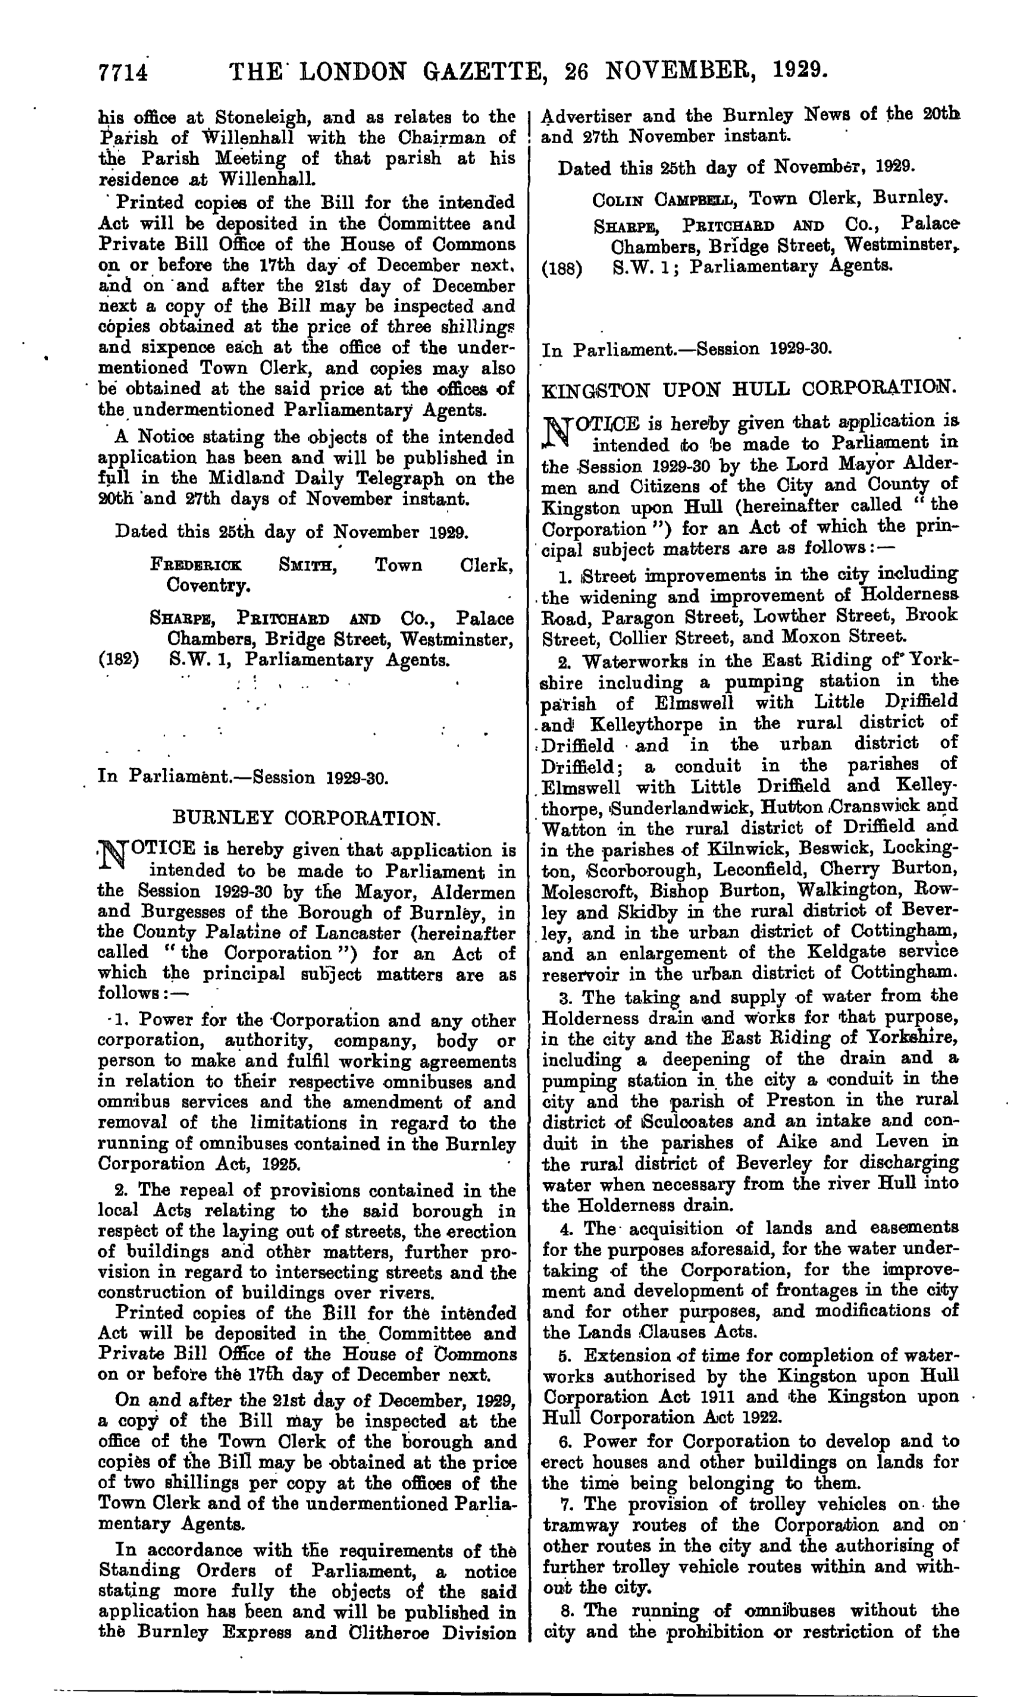 7714 the London Gazette, 26 November, 1929